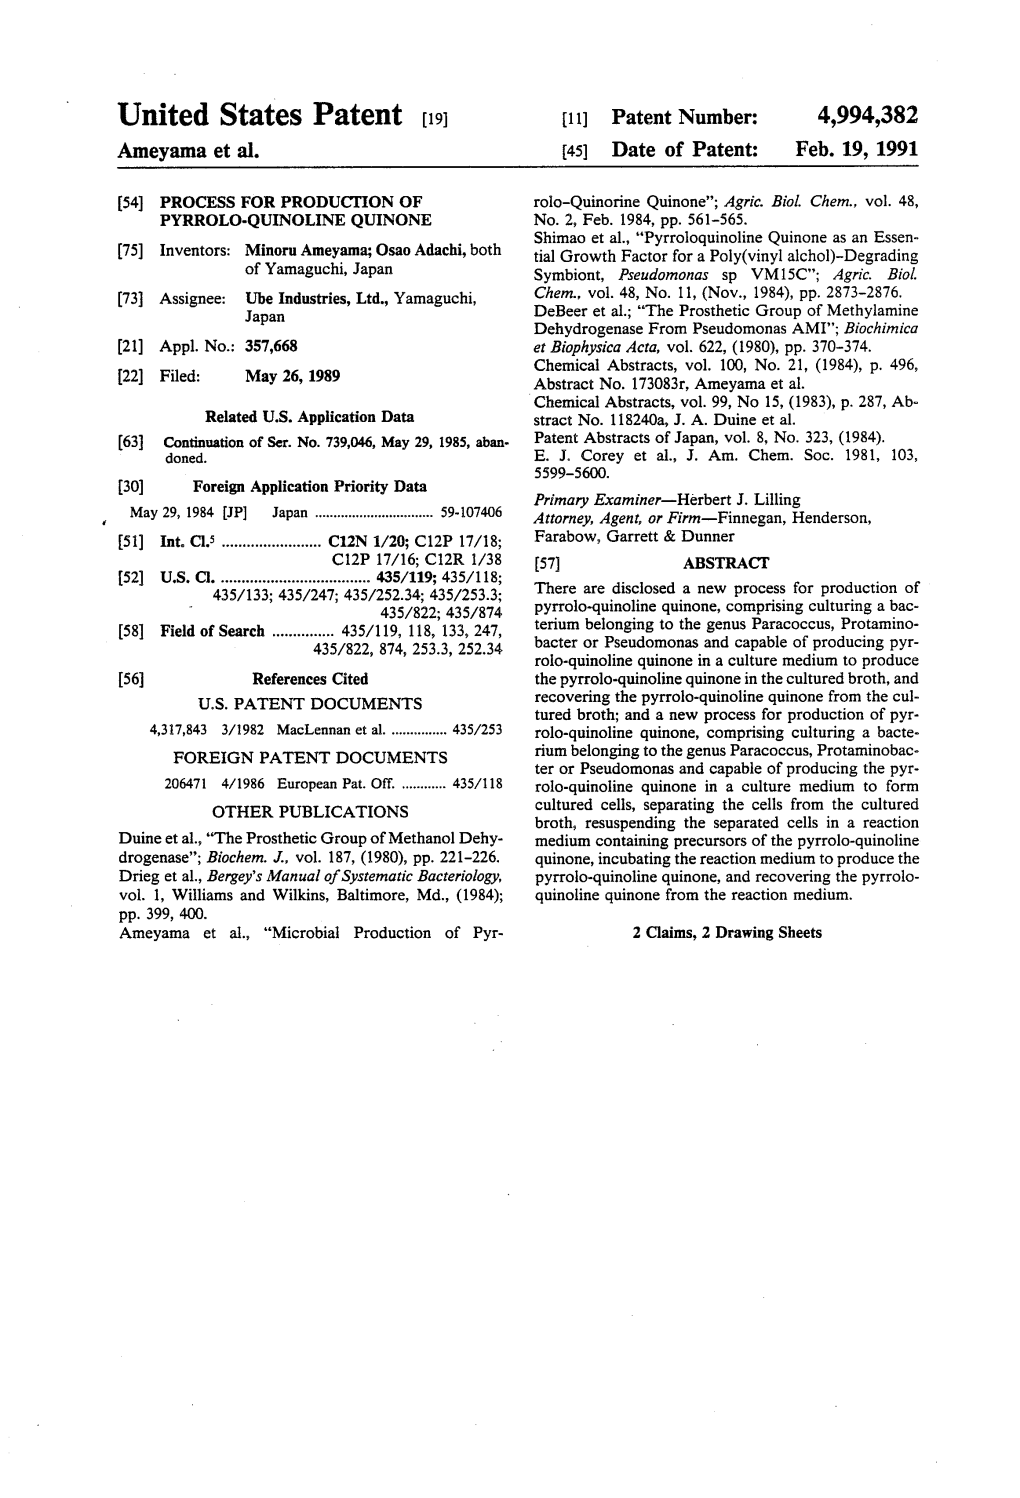 United States Patent (19) 11 Patent Number: 4,994,382 Ameyama Et Al